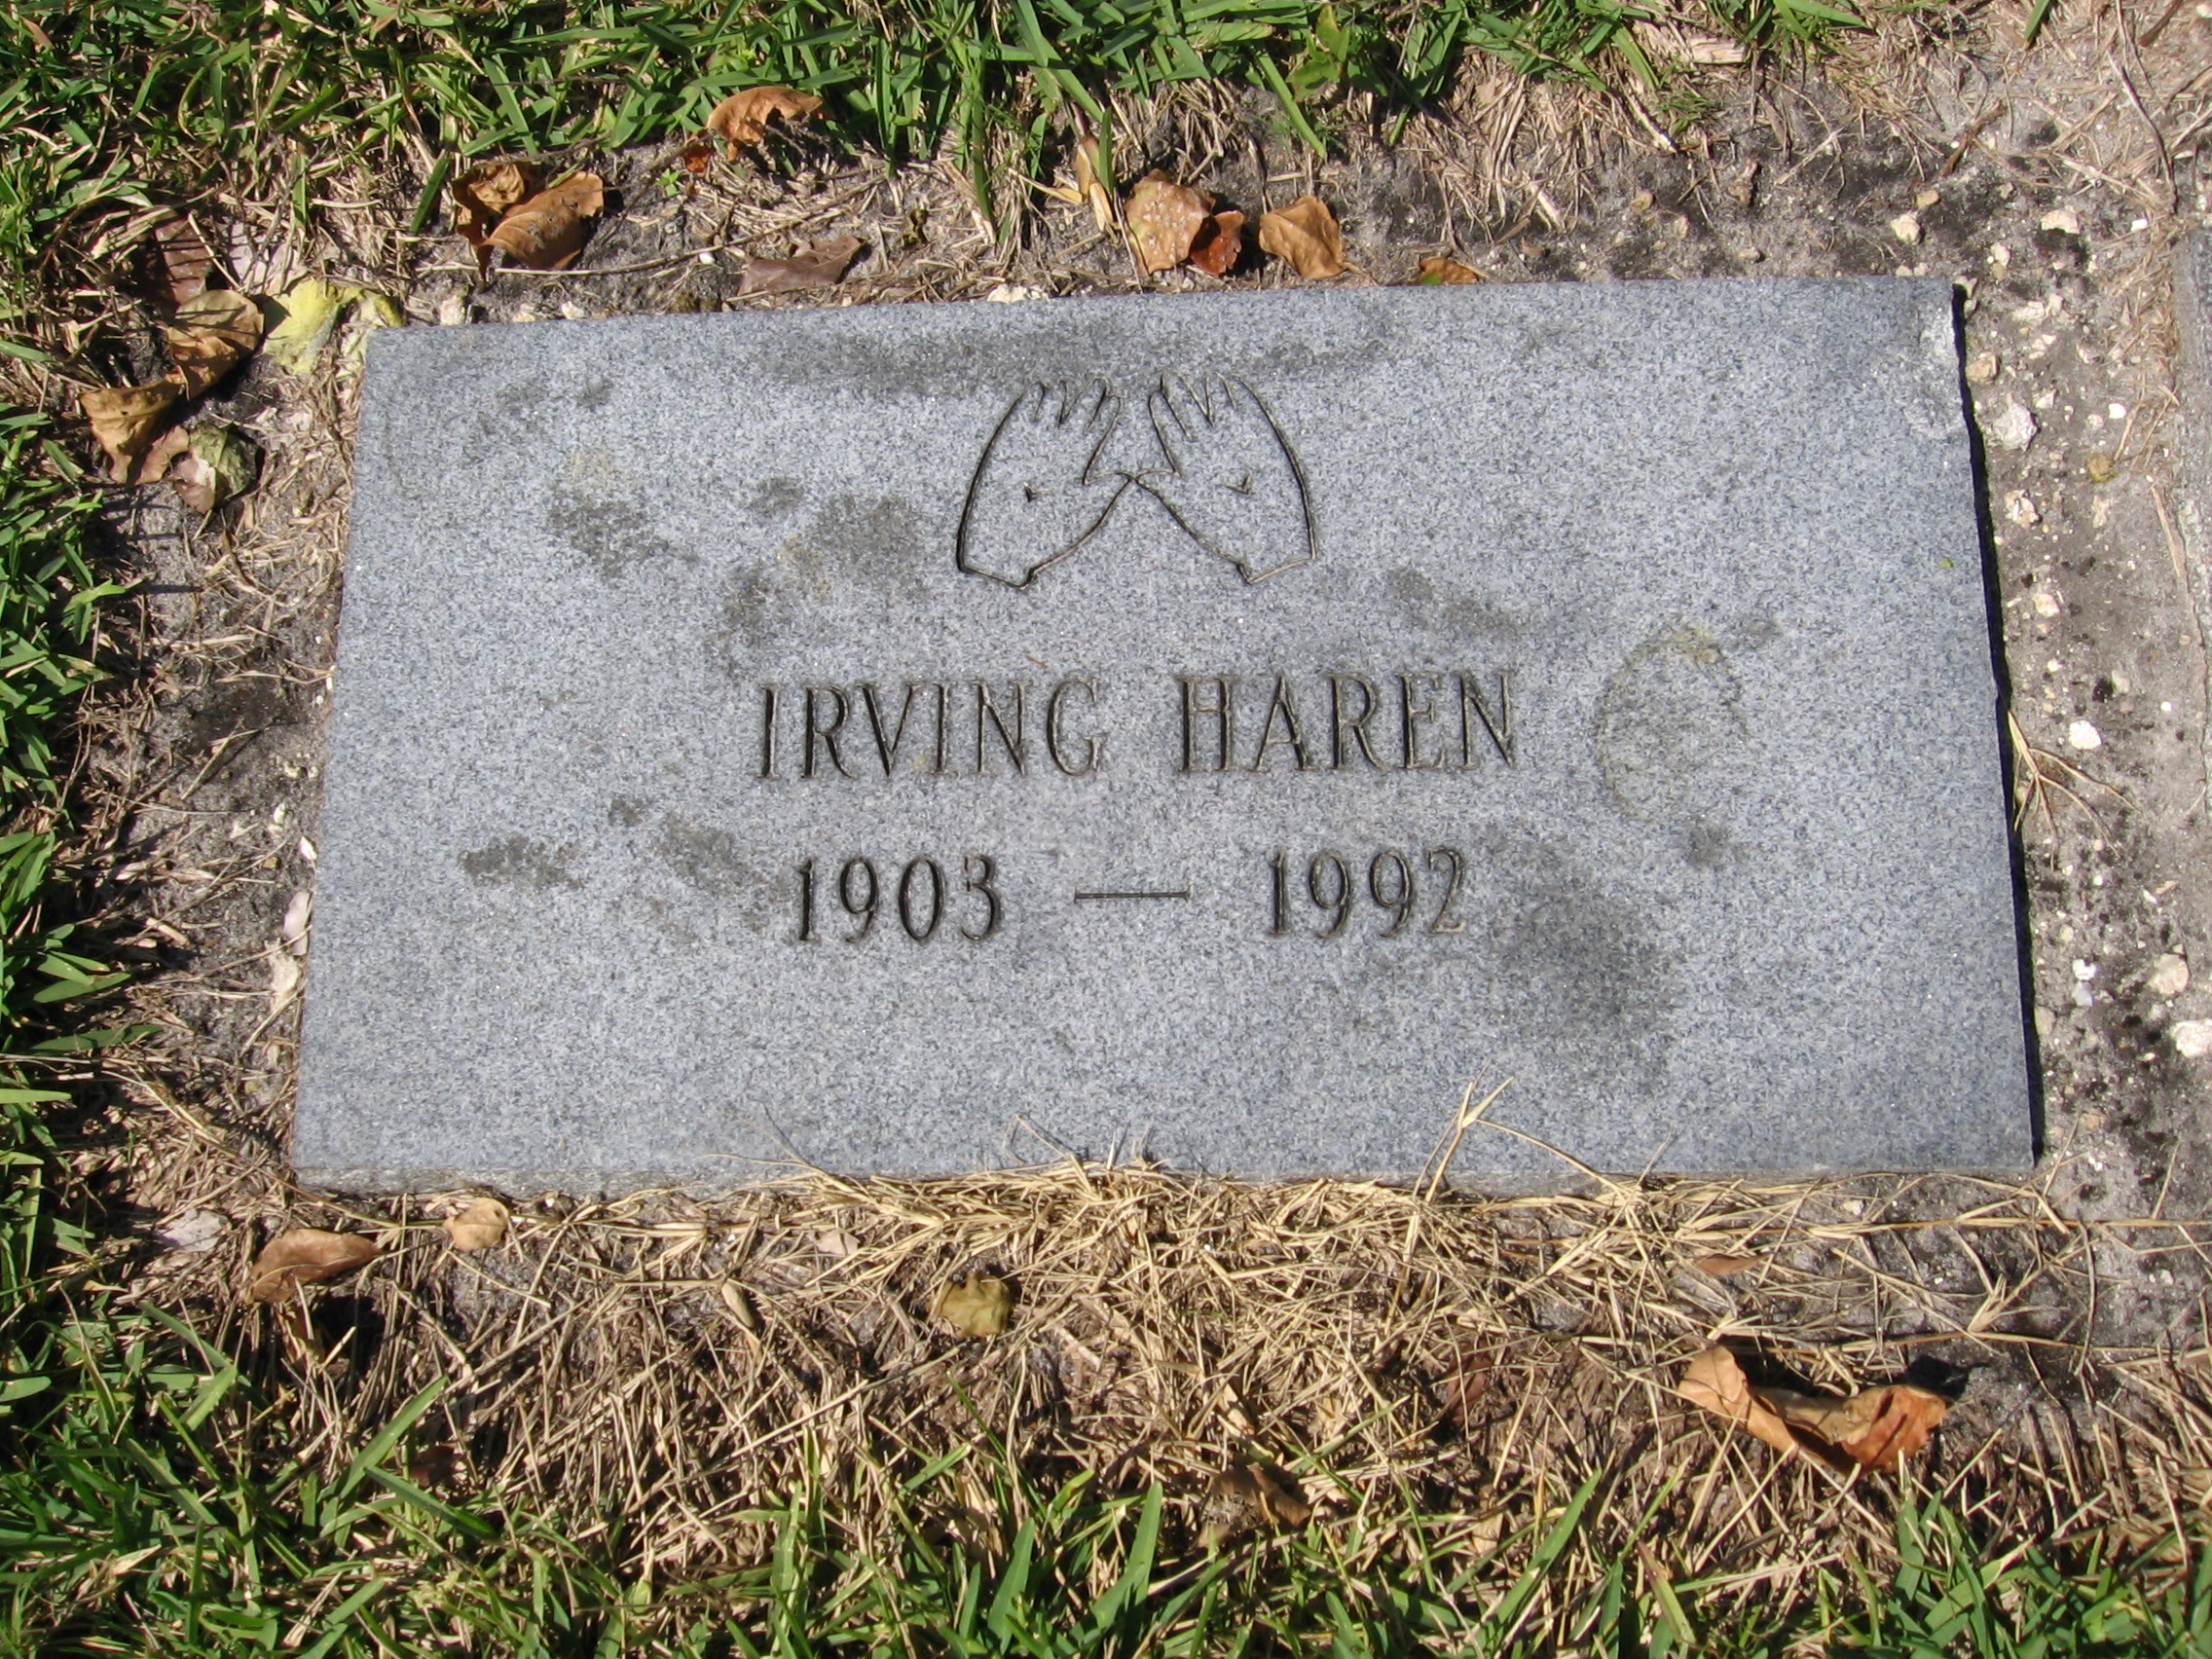 Irving Haren